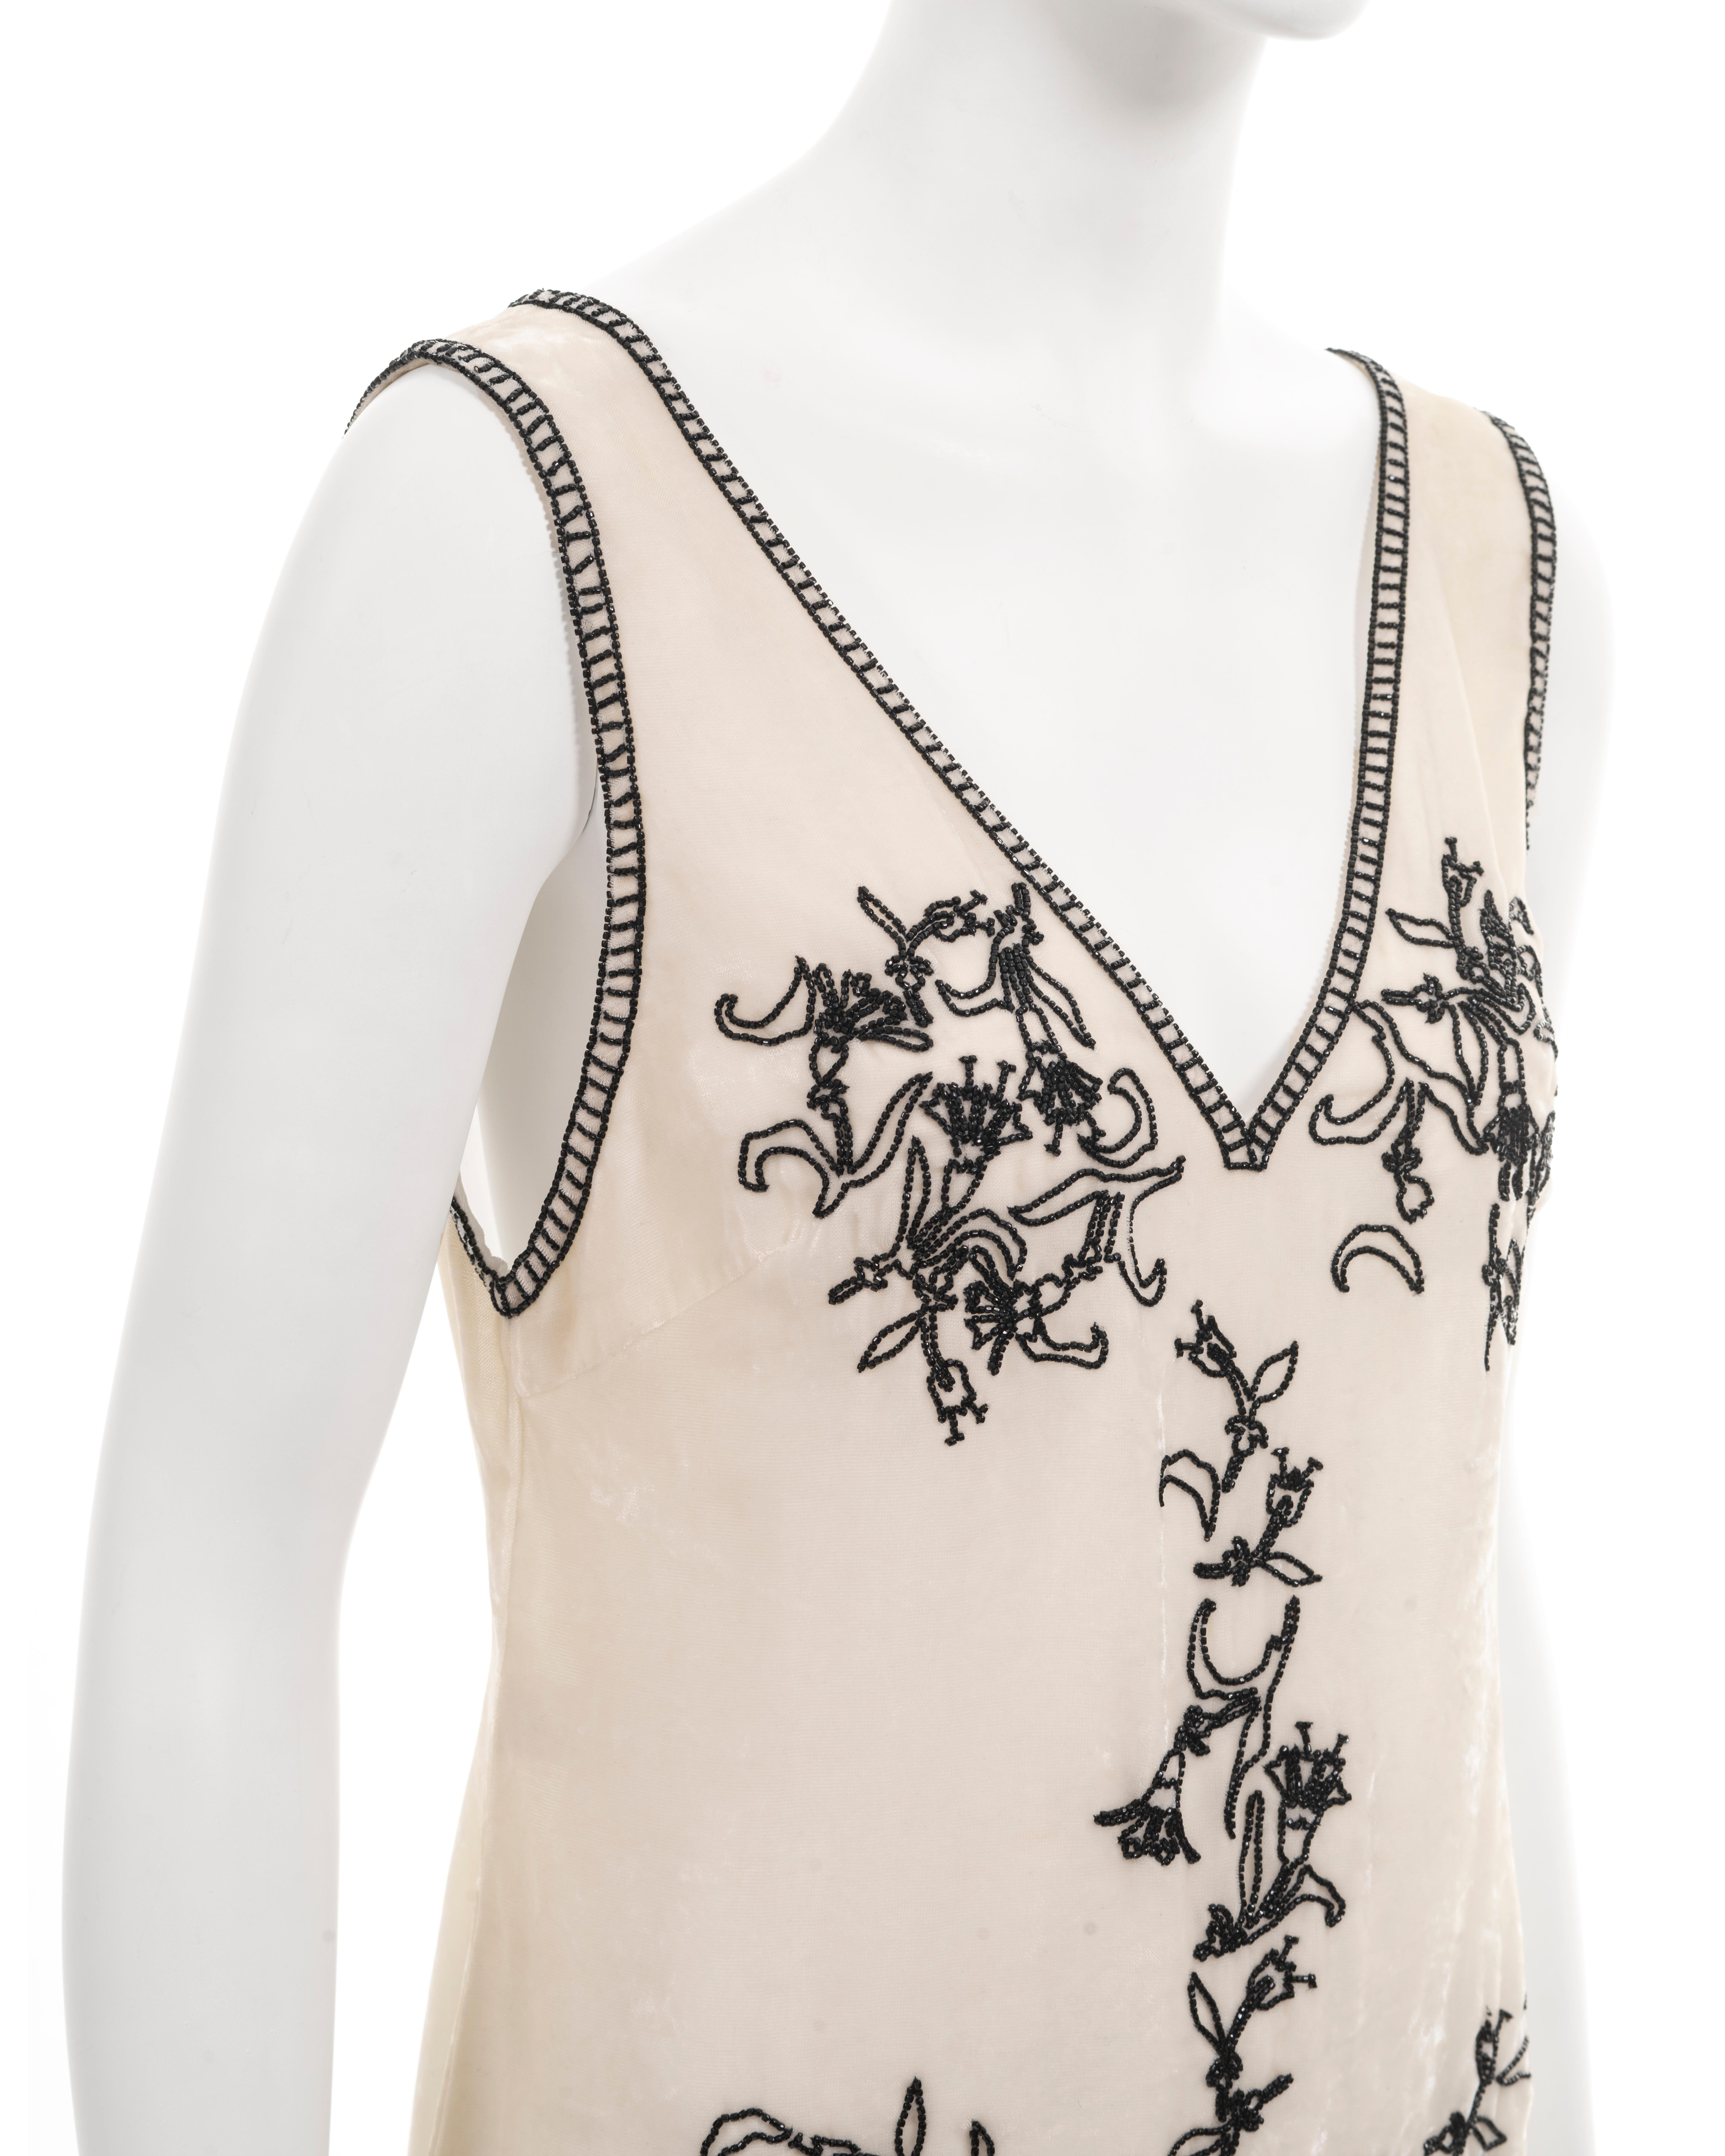 Prada by Miuccia Prada ivory velvet shift dress with beaded motif, fw 1997 For Sale 4